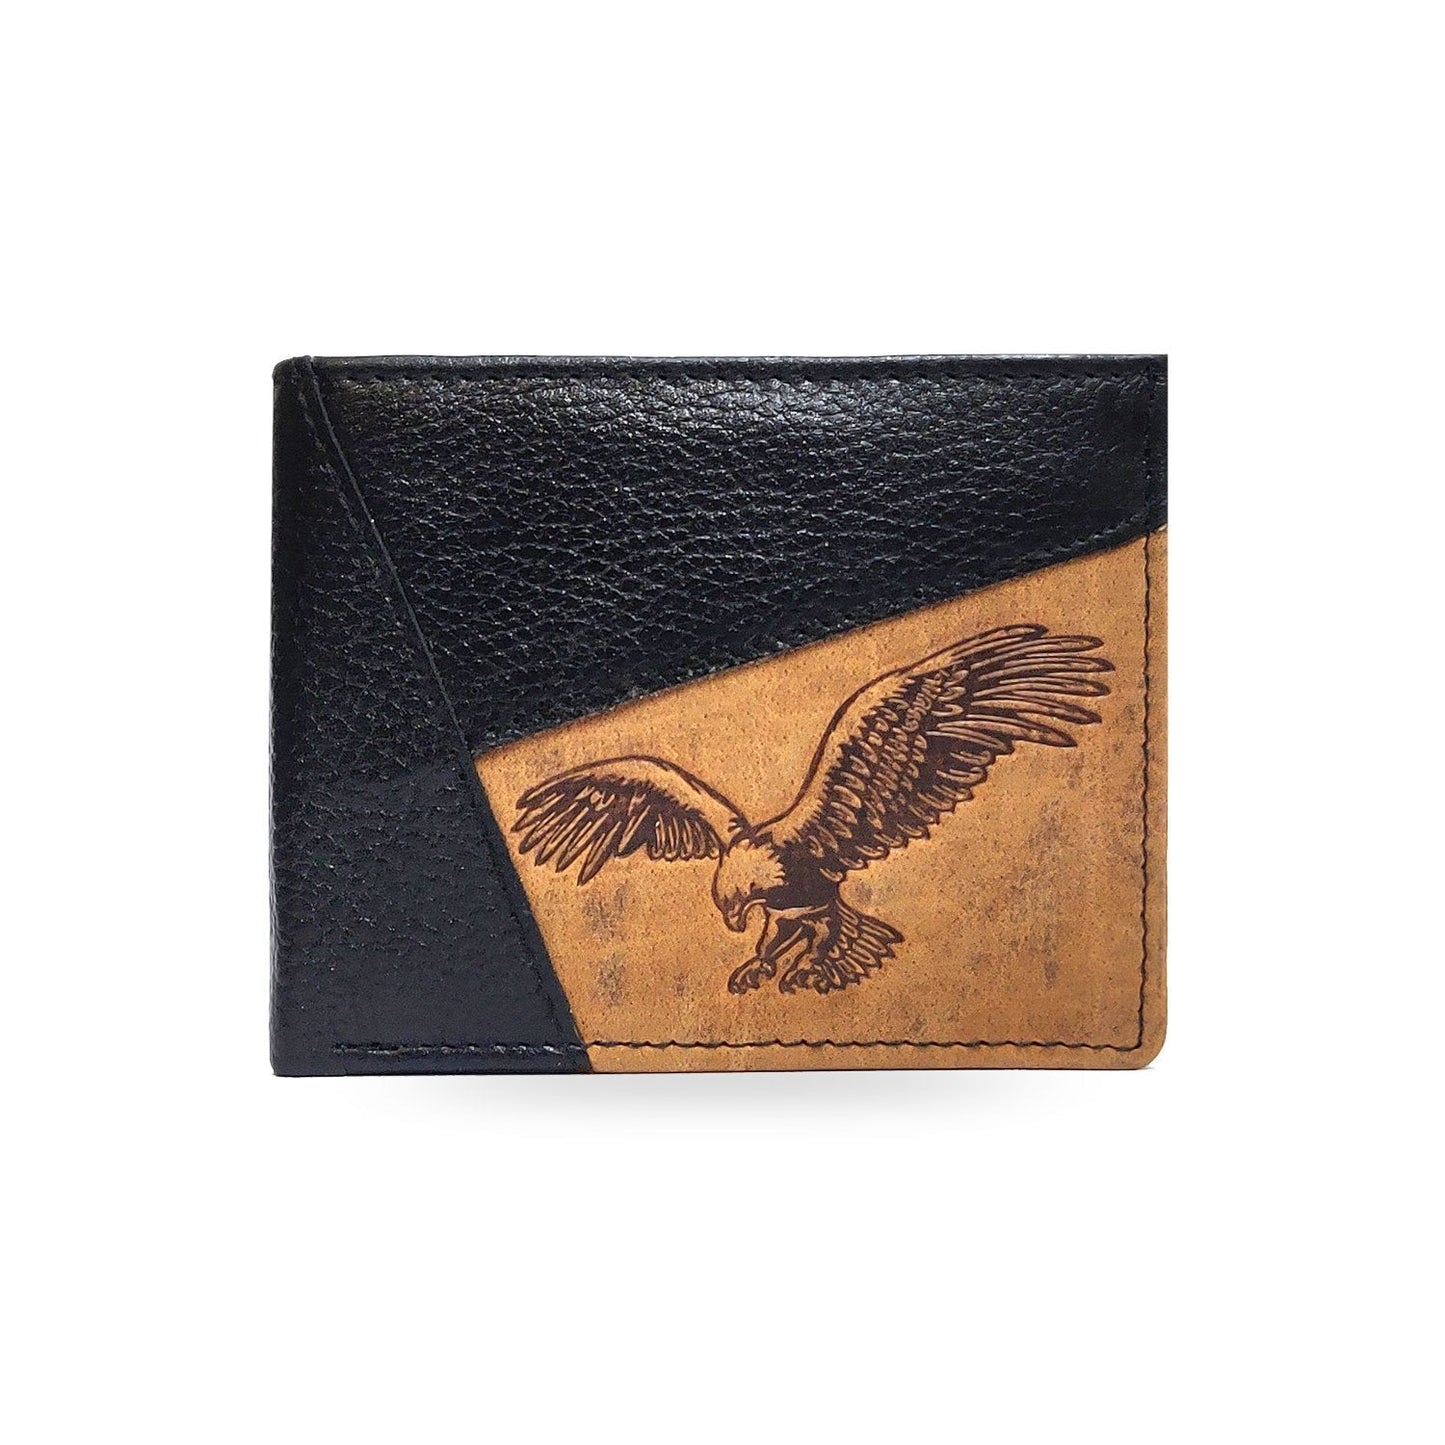 Brahma Bull Eagle Black Leather Wallet - Brahma Bull - Men's Grooming